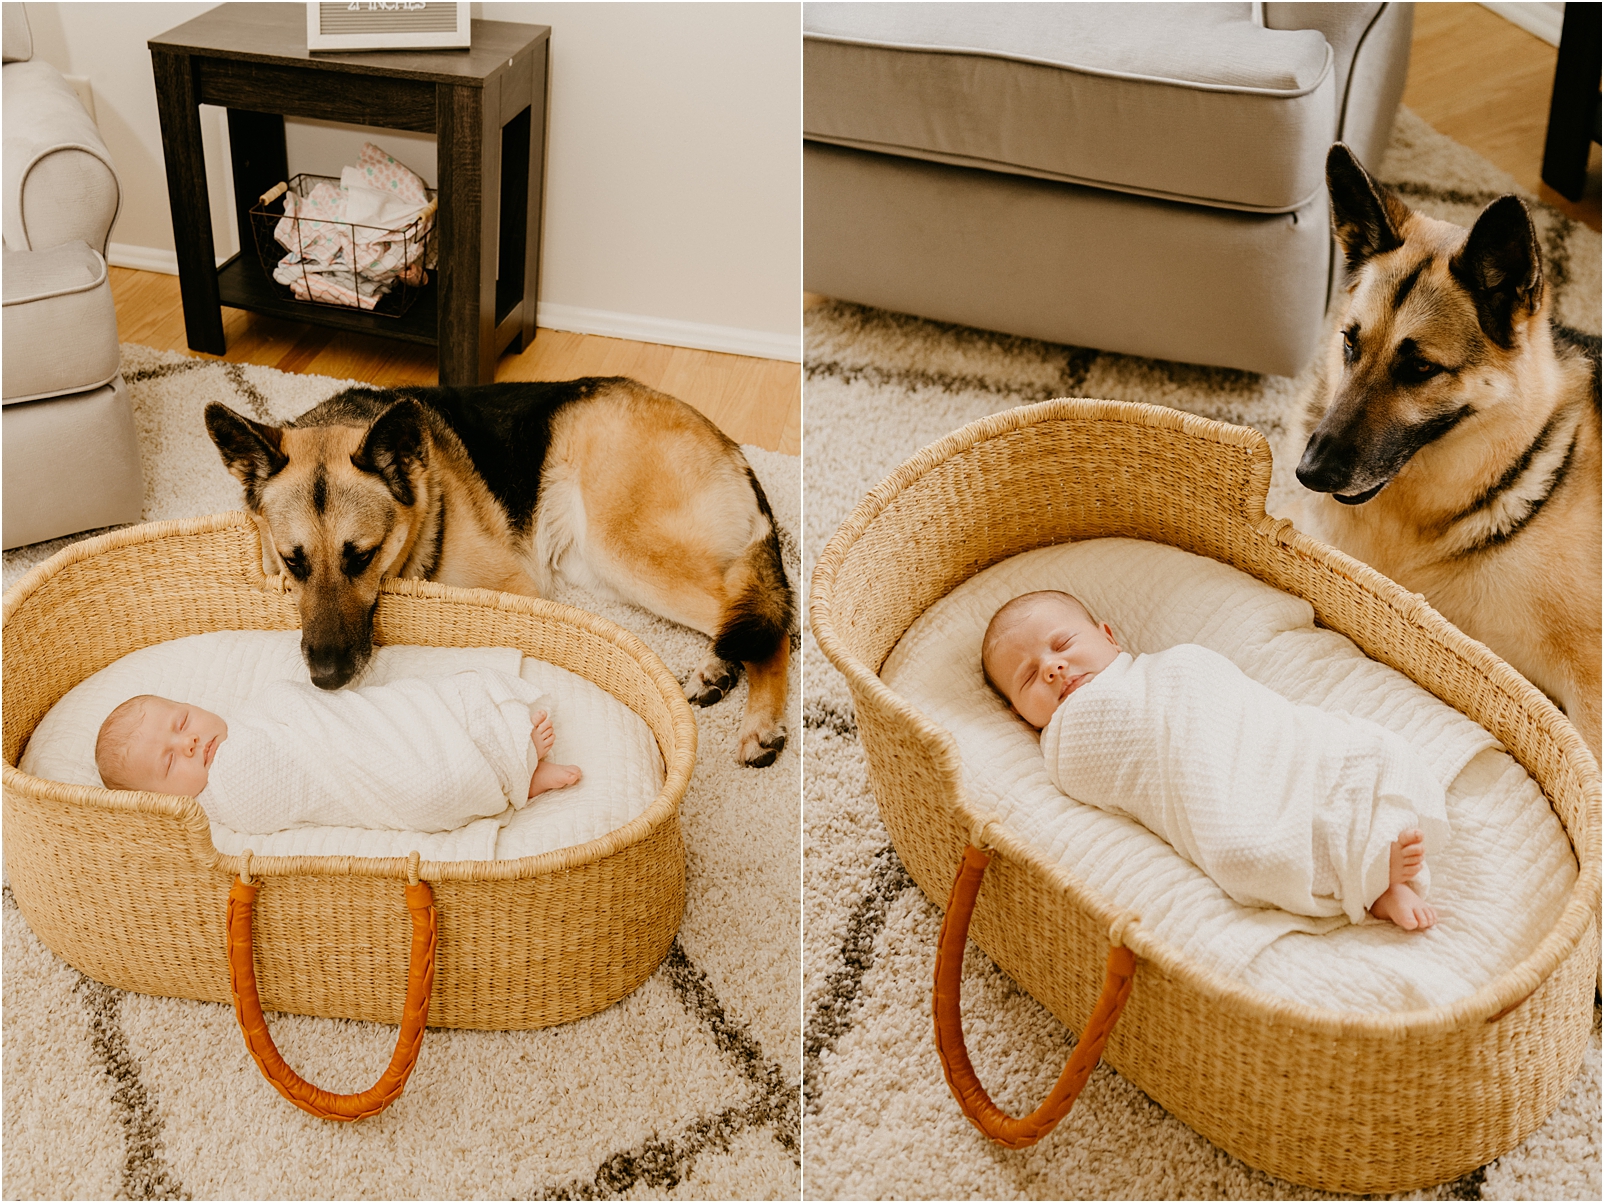  baby in a bassinet with German shepherd